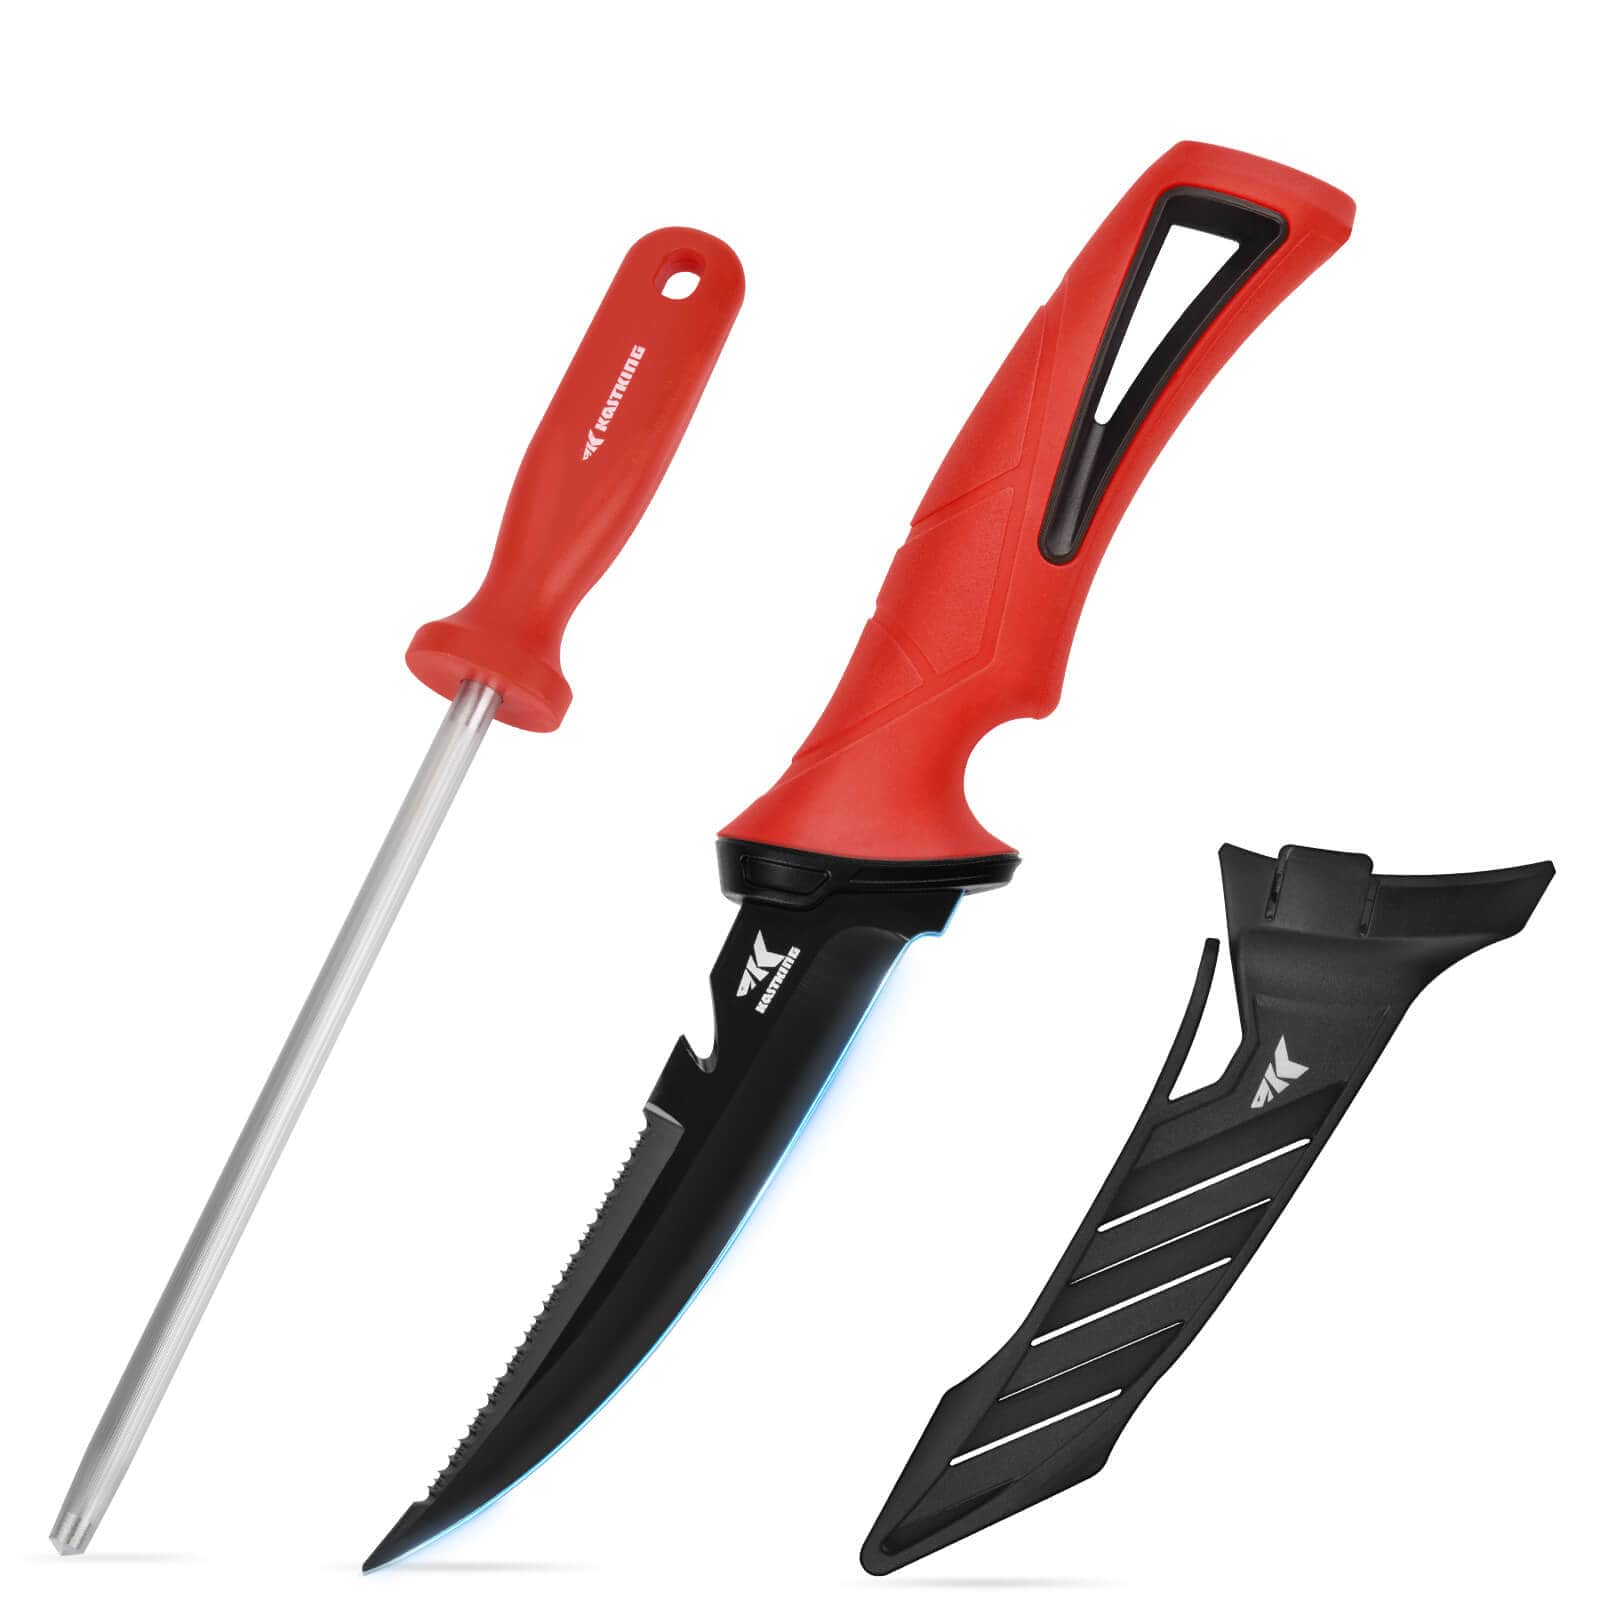 KastKing - Looking SHARP 🔪 KastKing Folding Fillet Knives